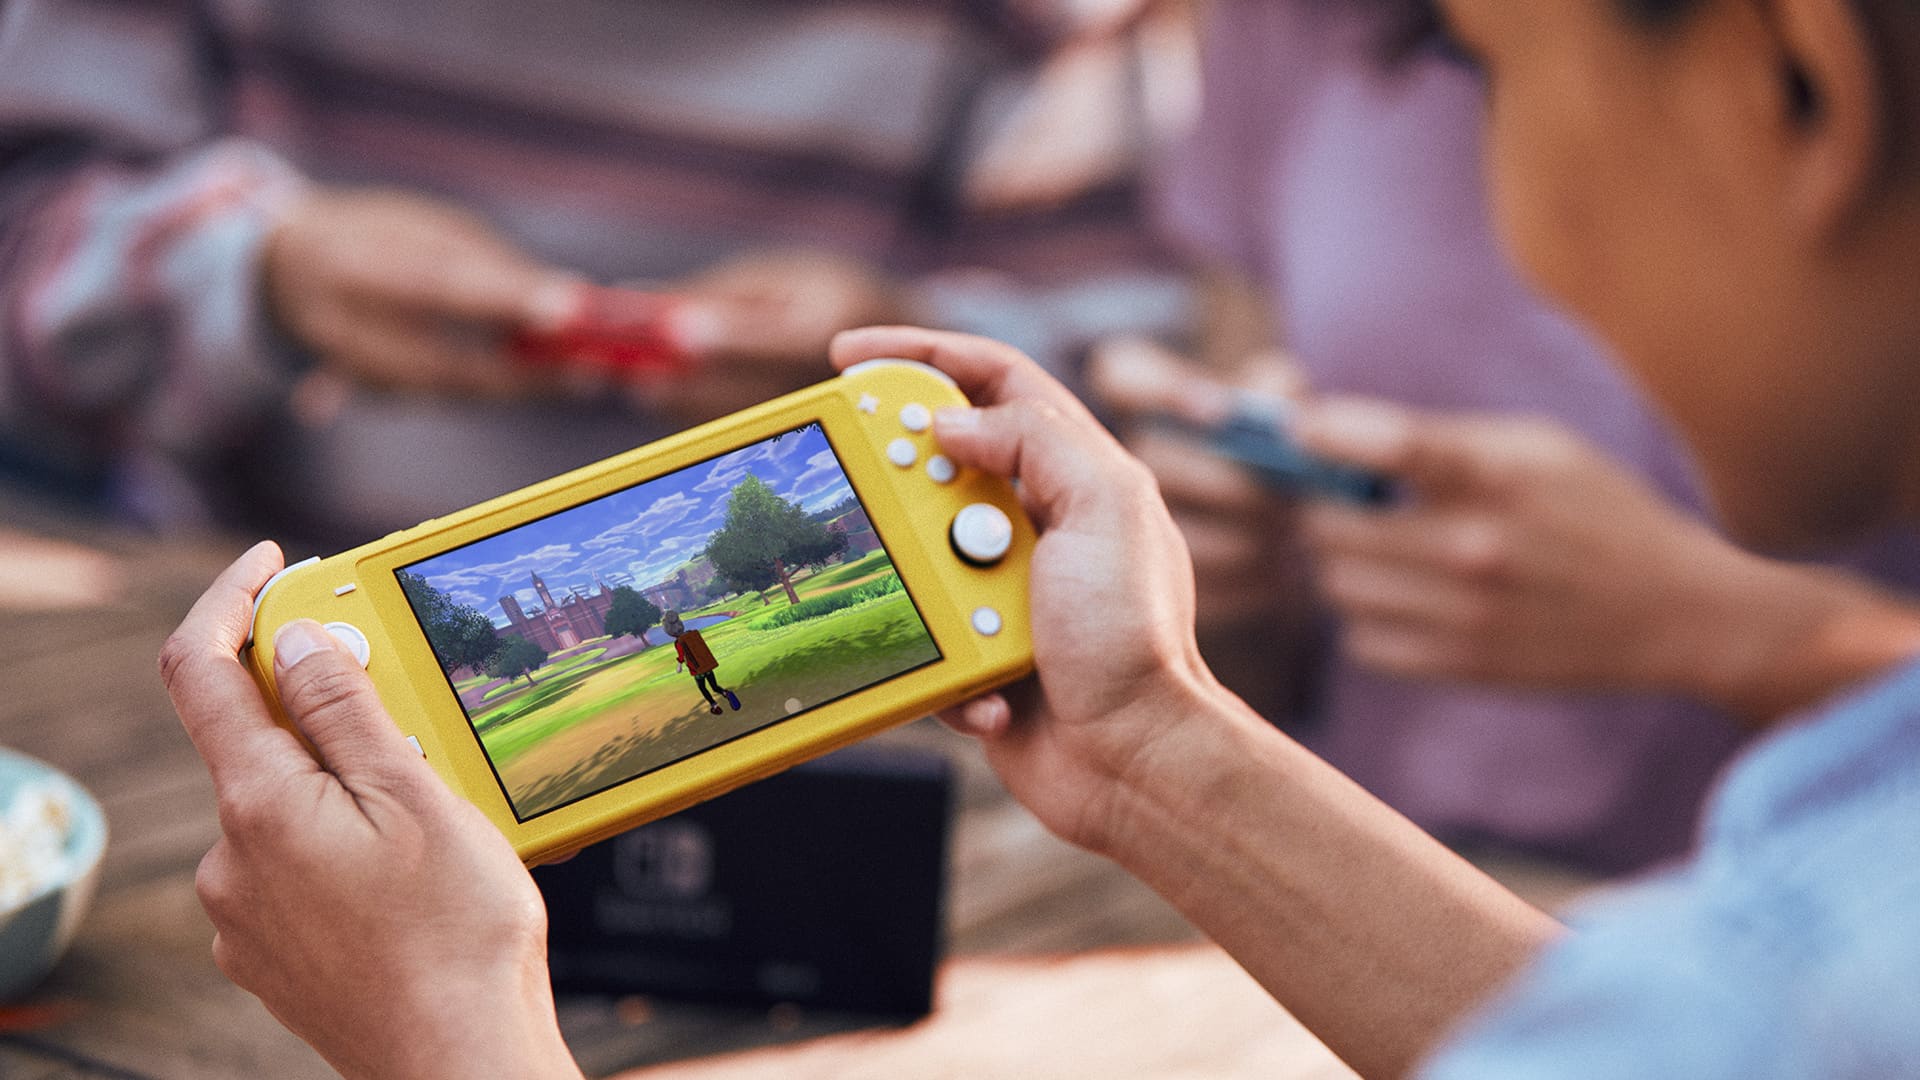 Nintendo Switch Lite - yellow